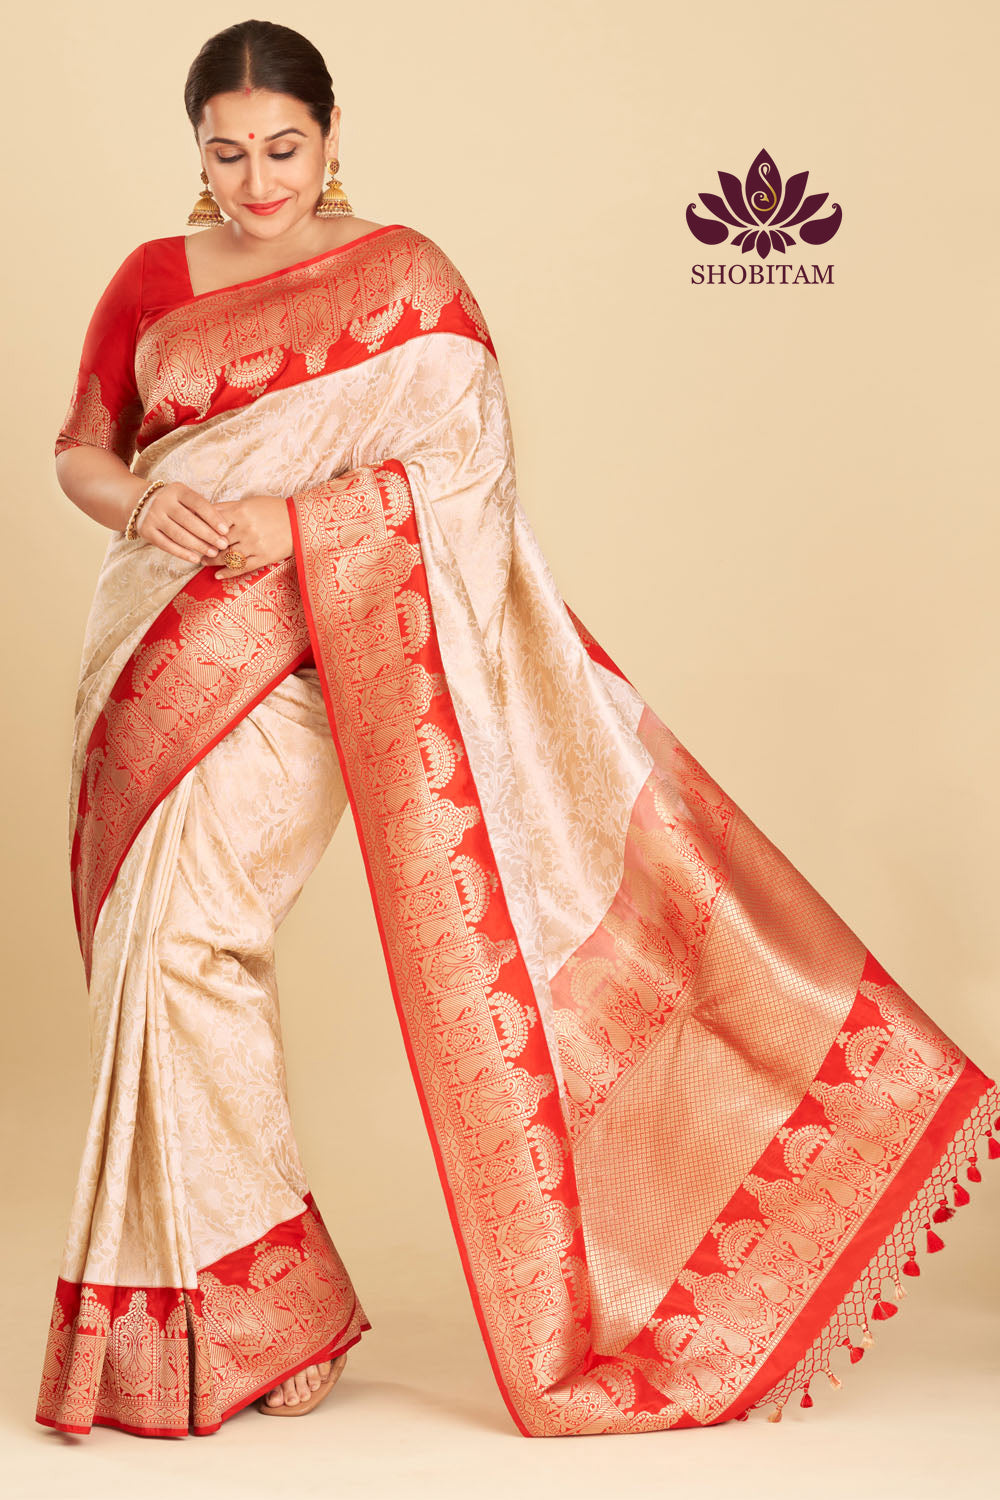 Exquisite Celebrity Brocade Banarasi Pure Katan Silk Saree in Ivory, Red & Gold with Dome Shaped Kadhiyal Borders | SILK MARK CERTIFIED